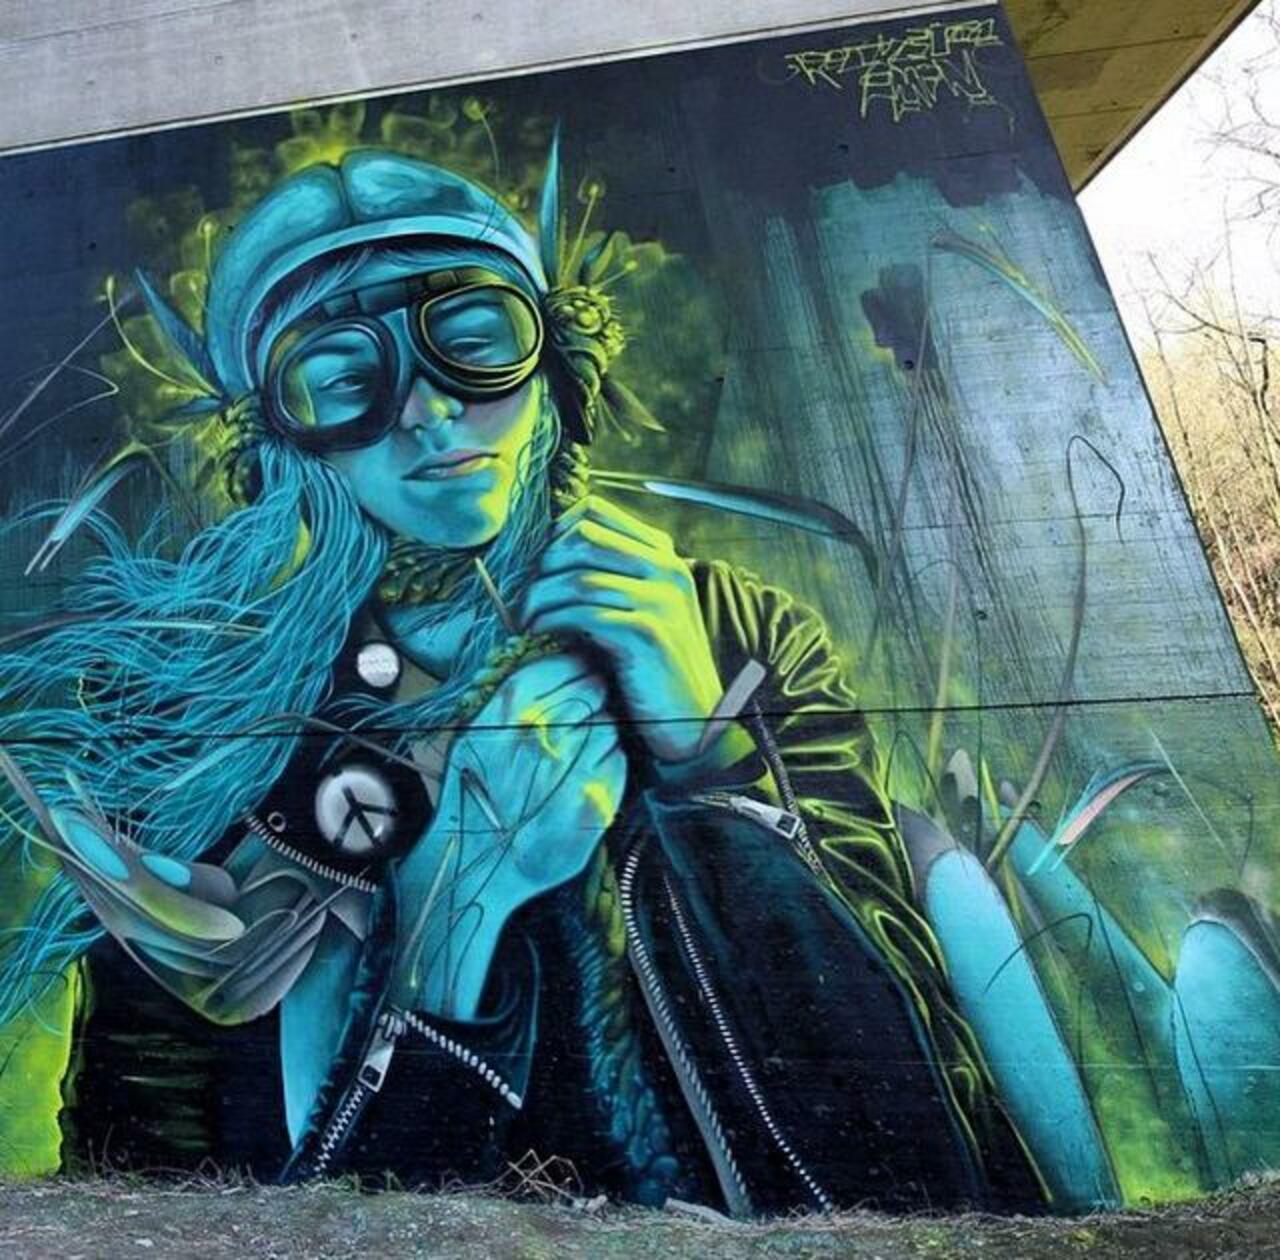 Street Art @GoogleStreetArt 
Street Art by Rocket & AMIN in Belgium
via @pinkbigmac
#art #arte #graffiti #streetart http://t.co/yAznT7X7at